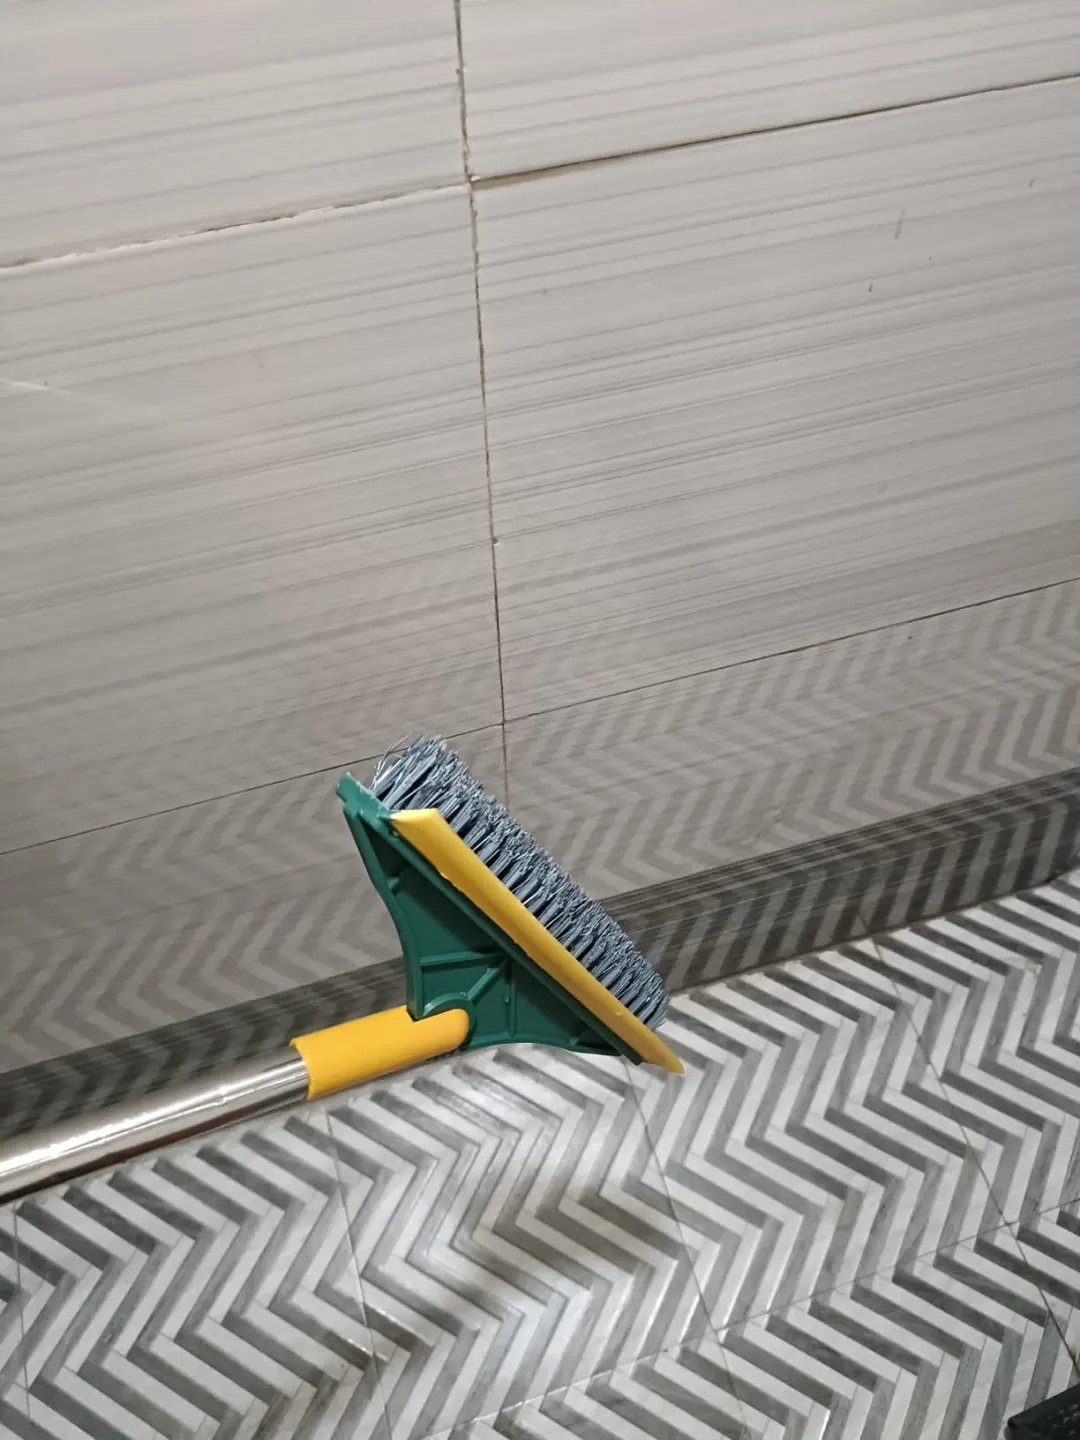 Buy KARTUNBOX 2 in 1 Bathroom Cleaning Brush Wiper Tiles Cleaning